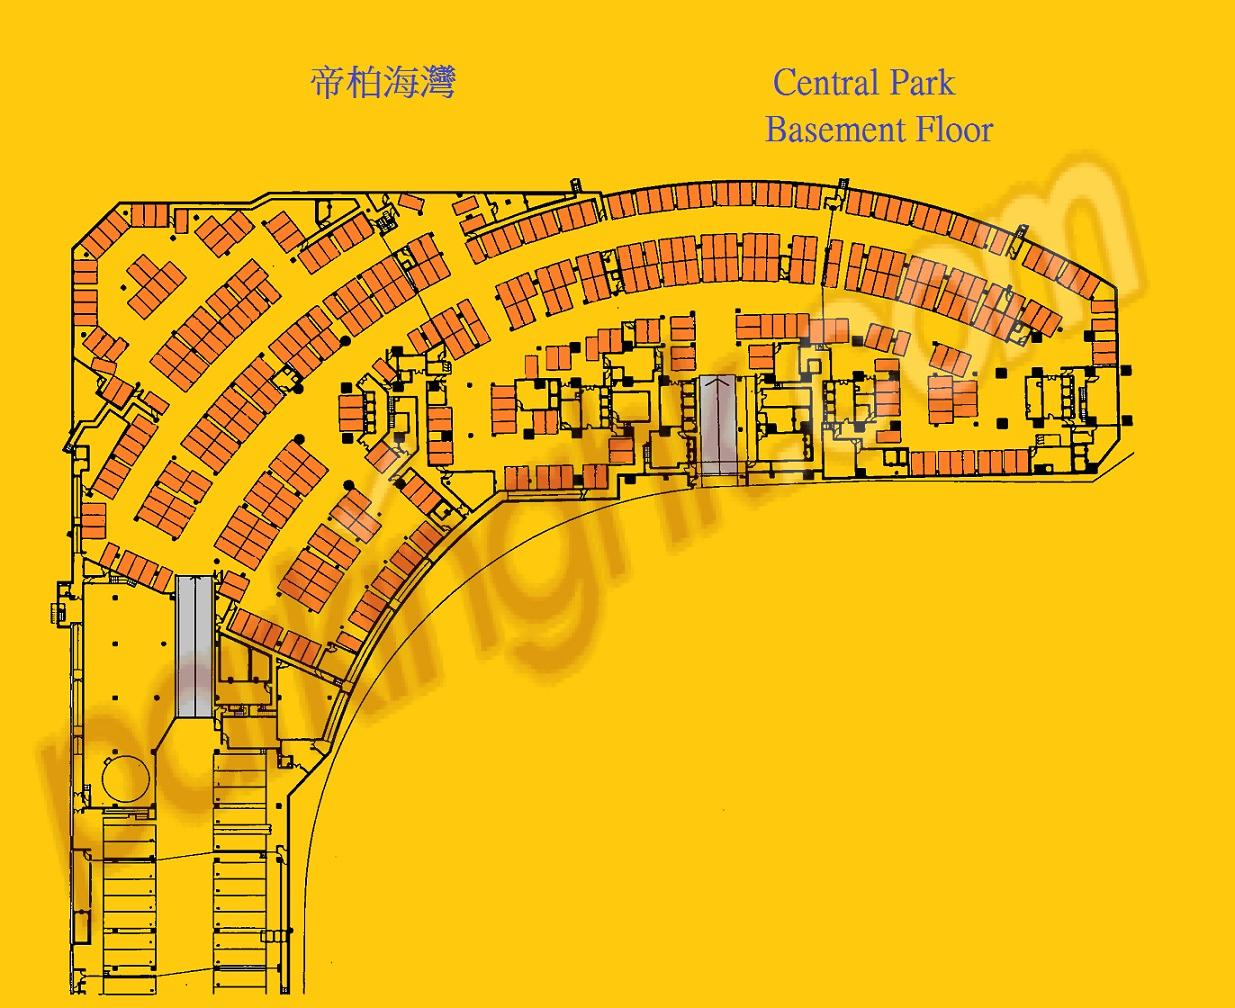  Mong Kok Carpark  Hoi Ting Road  Central Park  Floor plan 香港車位.com ParkingHK.com